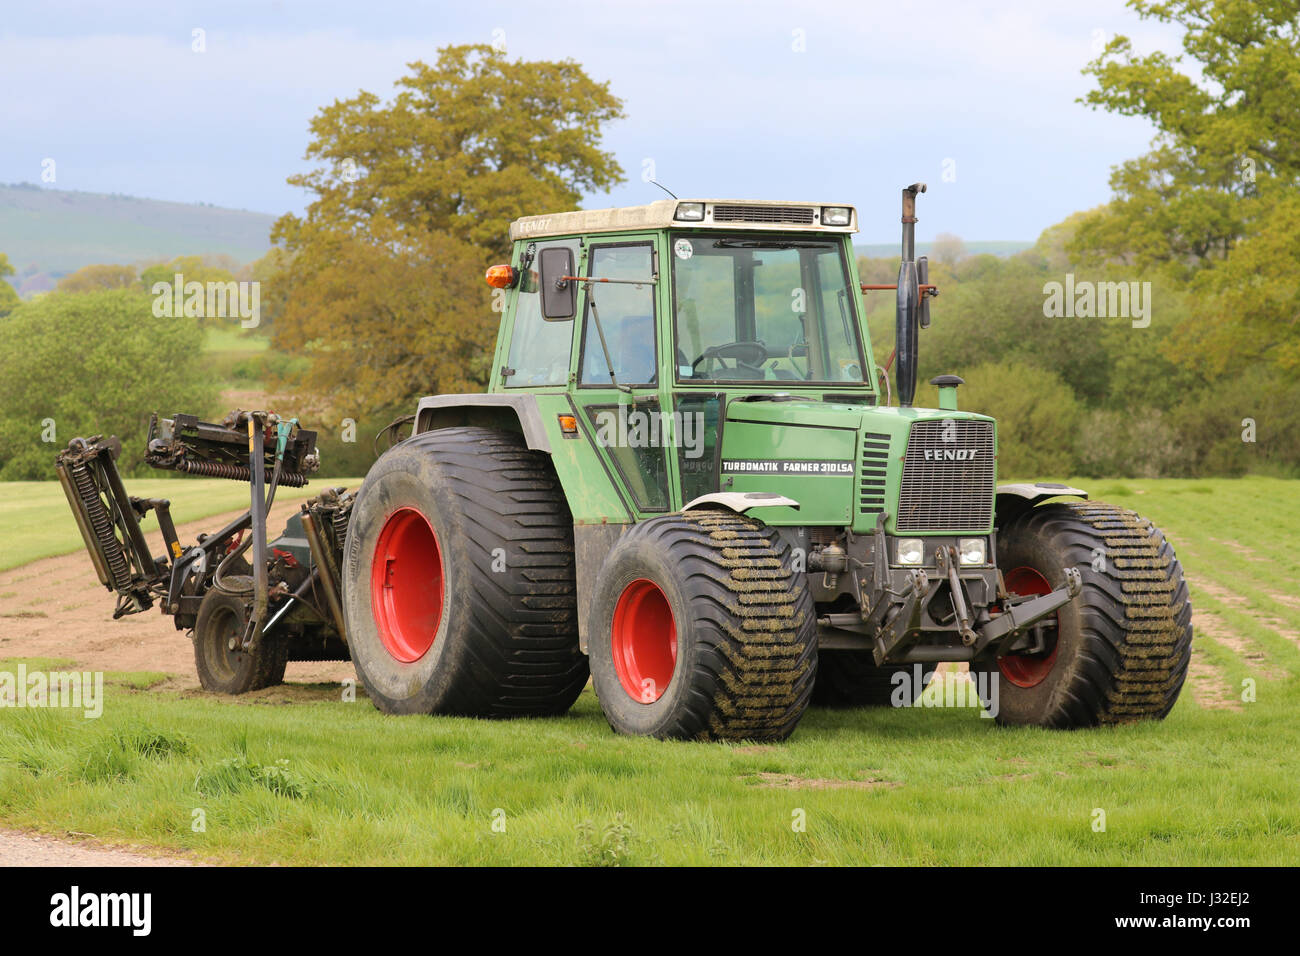 Fernot Tractor Turbomatik Farmer 310 LSA Stock Photo